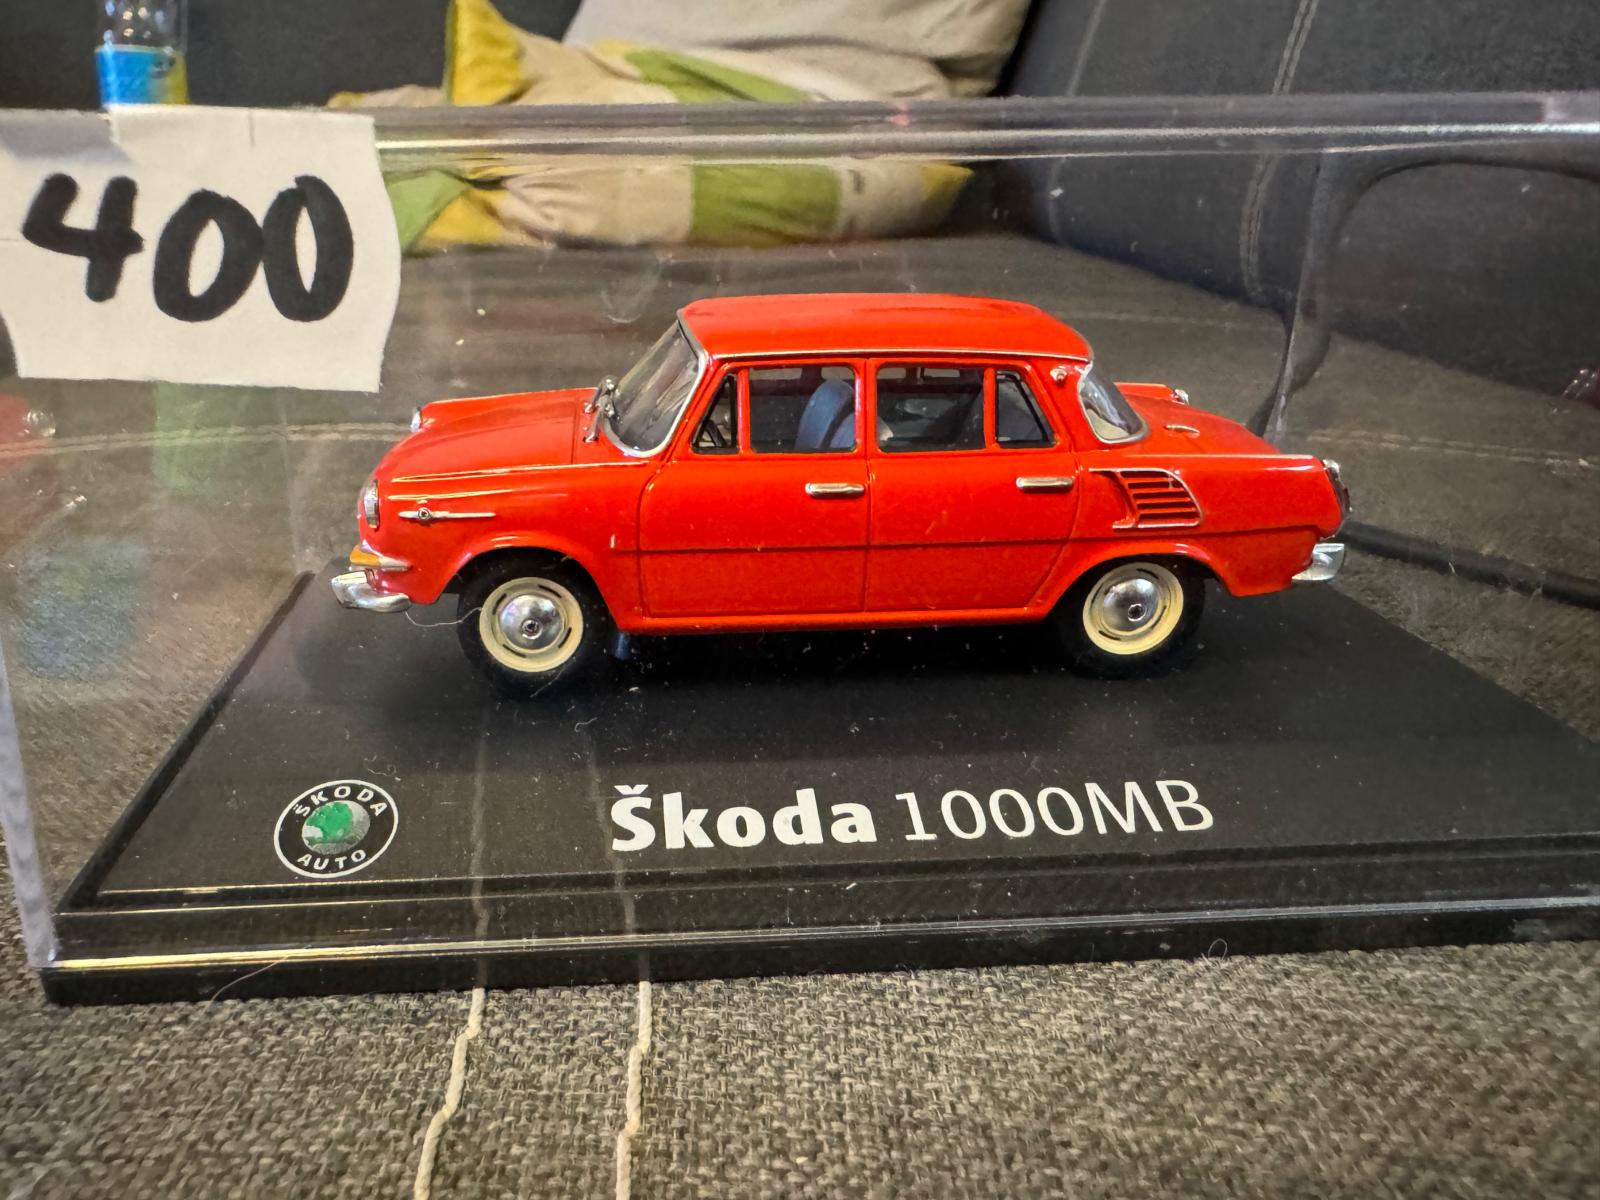 Škoda 1000mb 1:43 Abrex - Modely automobilov